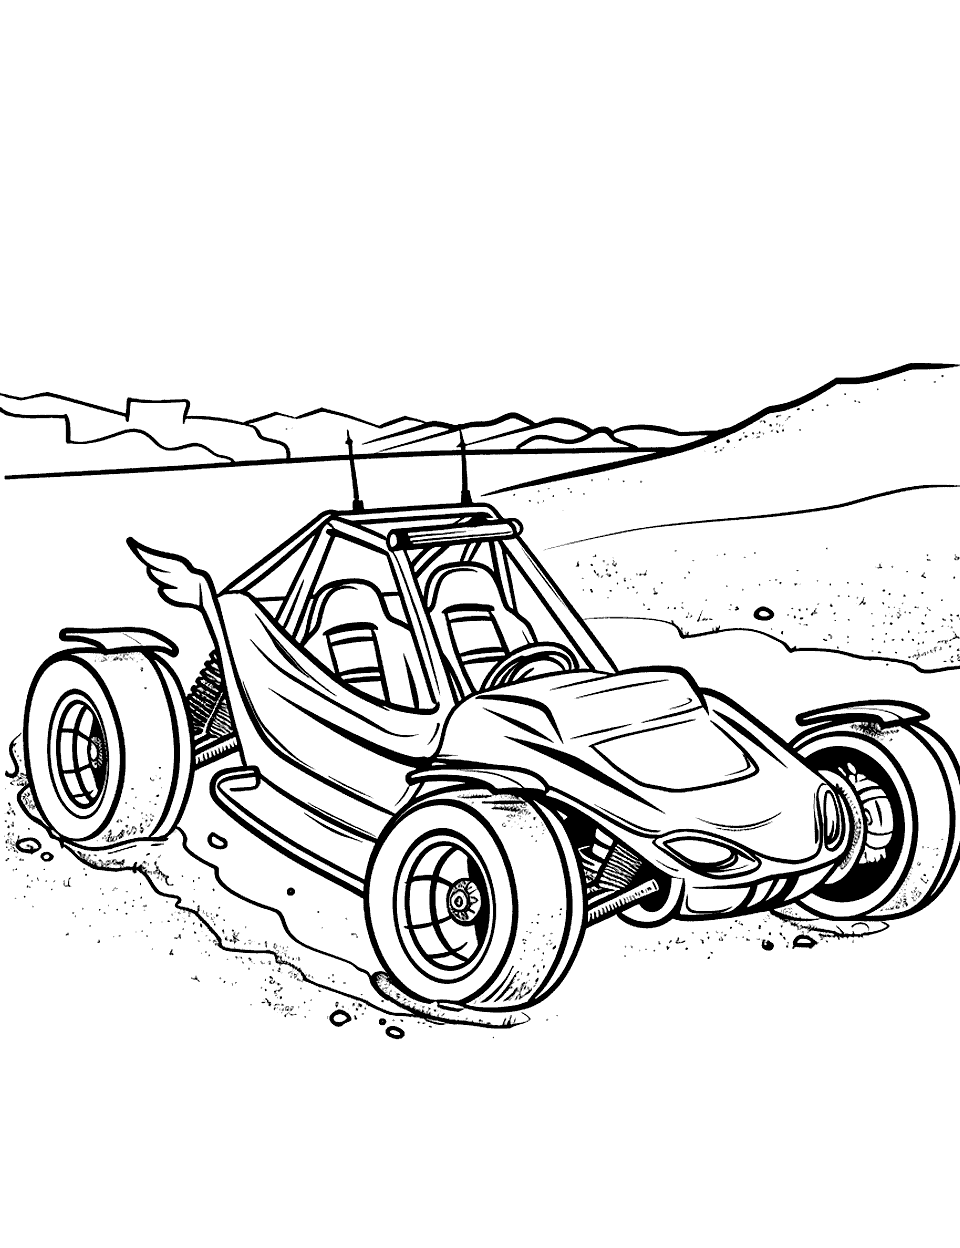 Beachside Buggy Race Coloring Page - A Hot Wheel buggie racing along the shoreline.